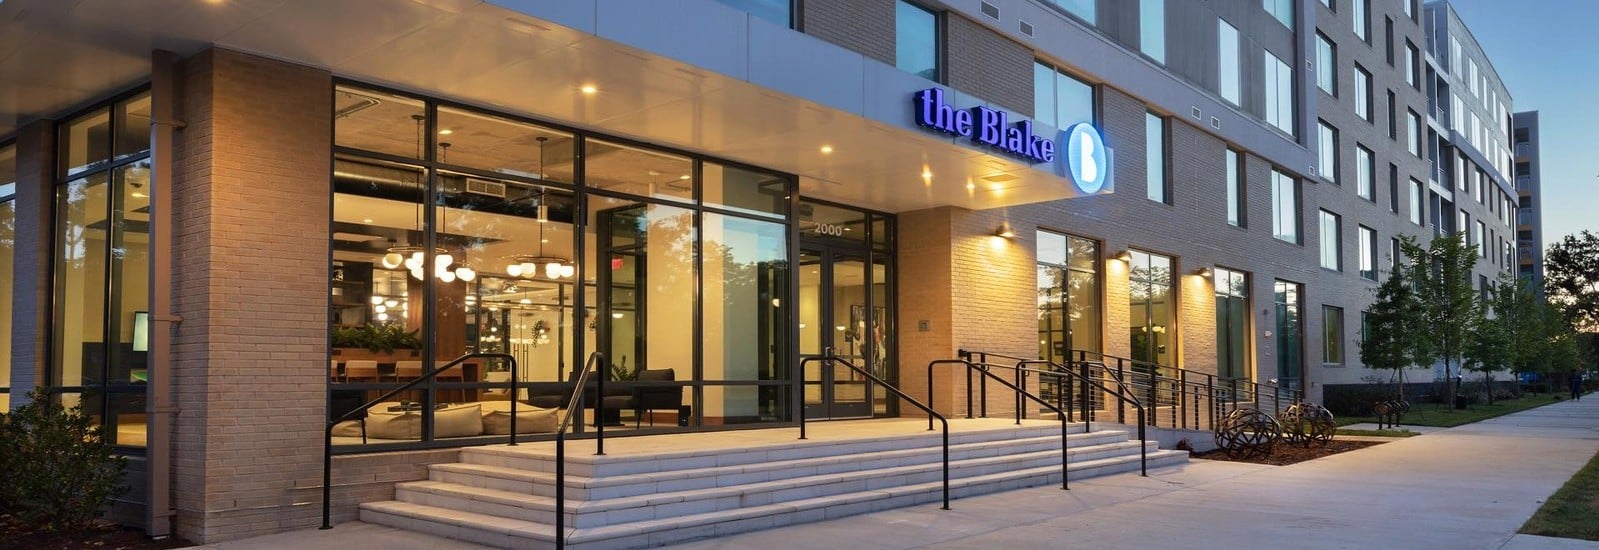 The Blake Entrance